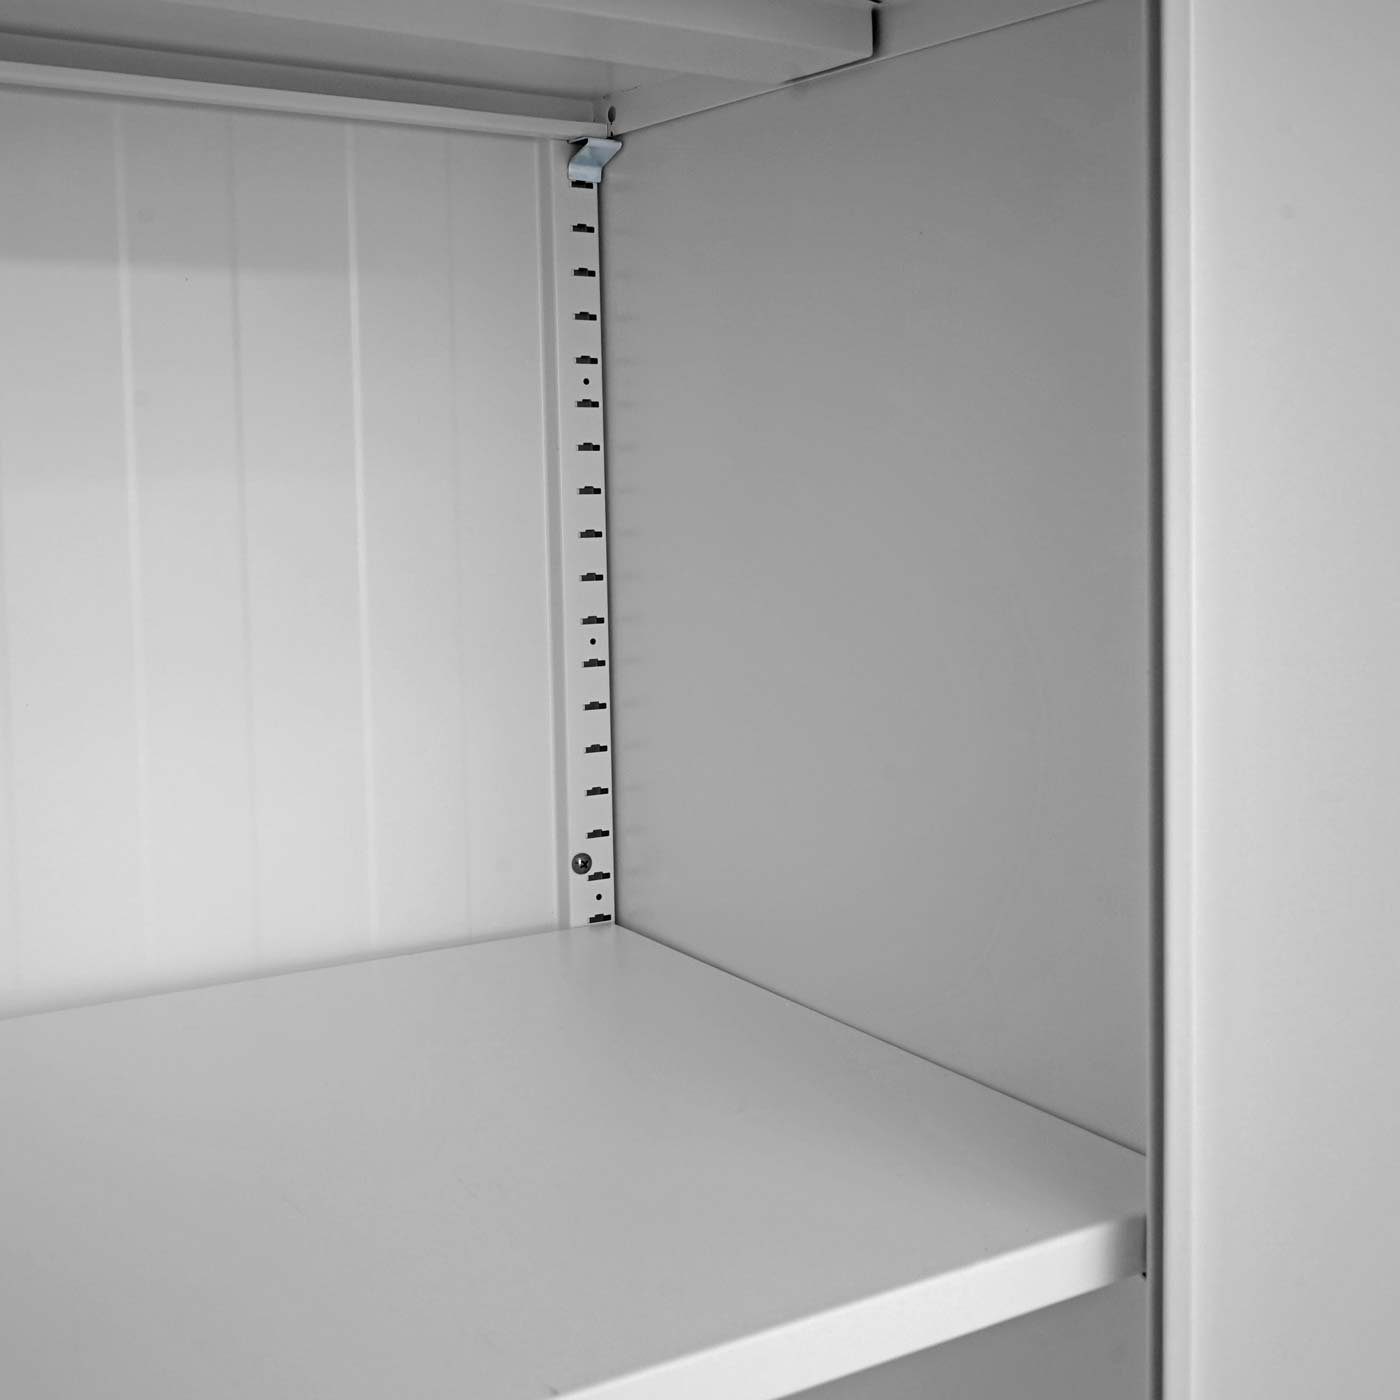 MCW Aktenschrank grau Türen Abschließbar, MCW-H17 Regalböden, | verstellbare zwei grau